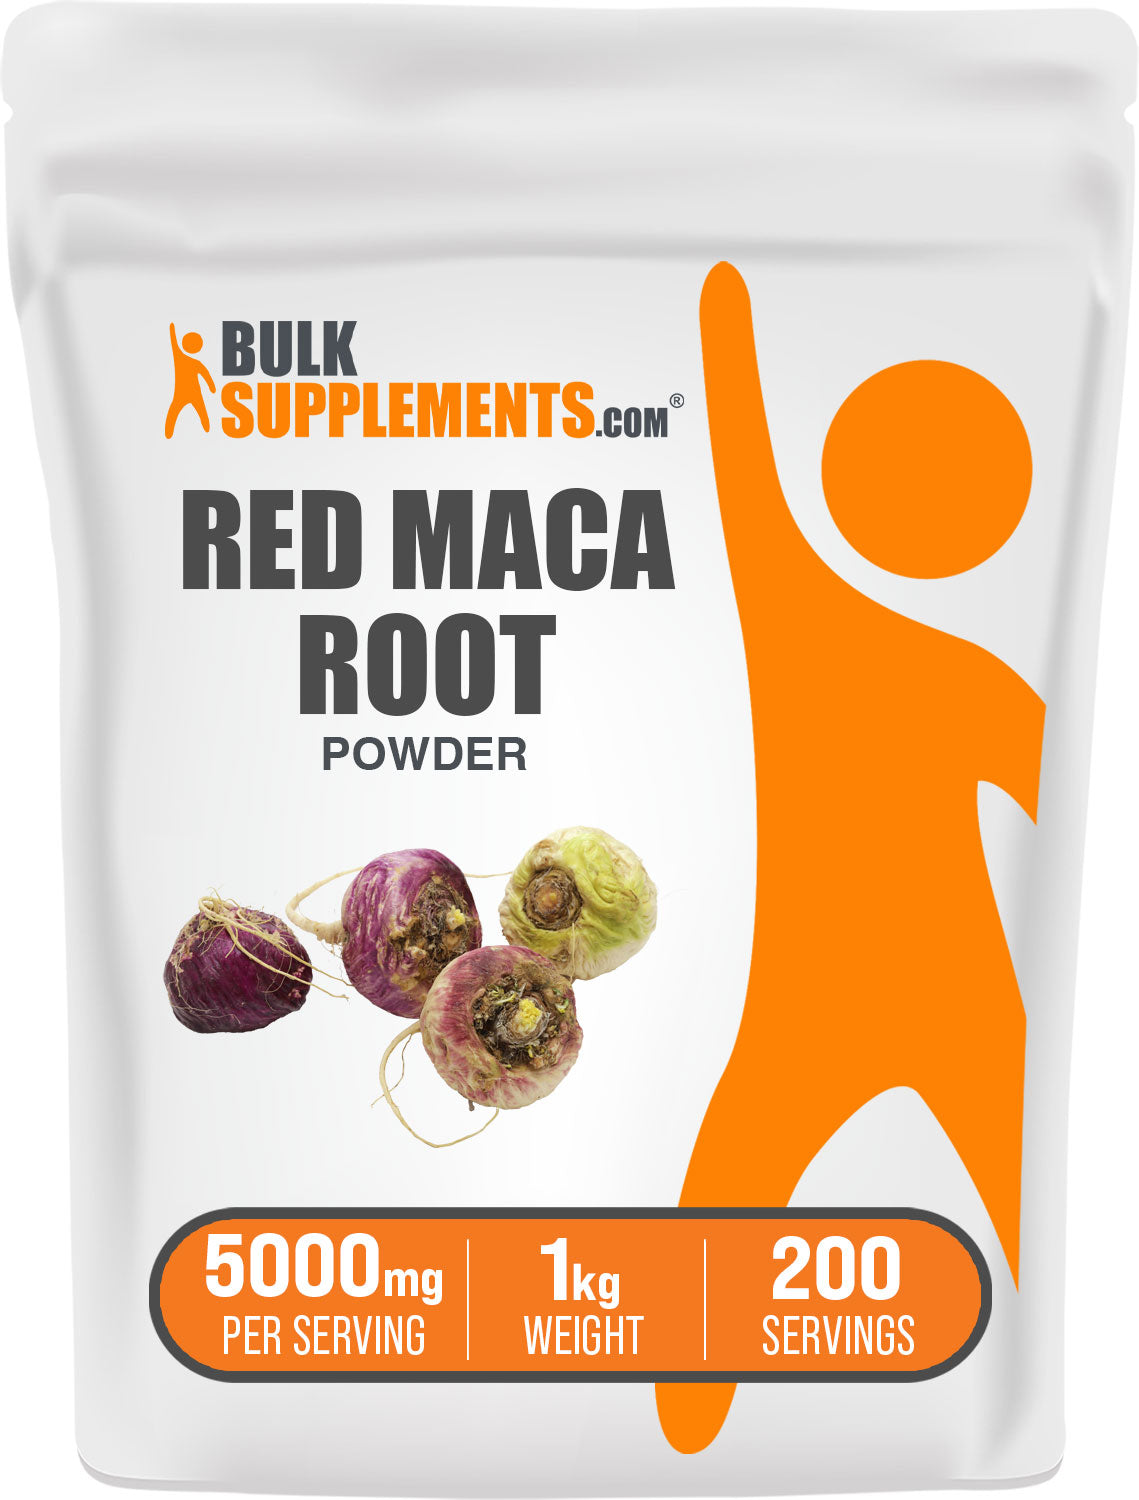 BulkSupplements.com Red Maca Powder 1kg Bag